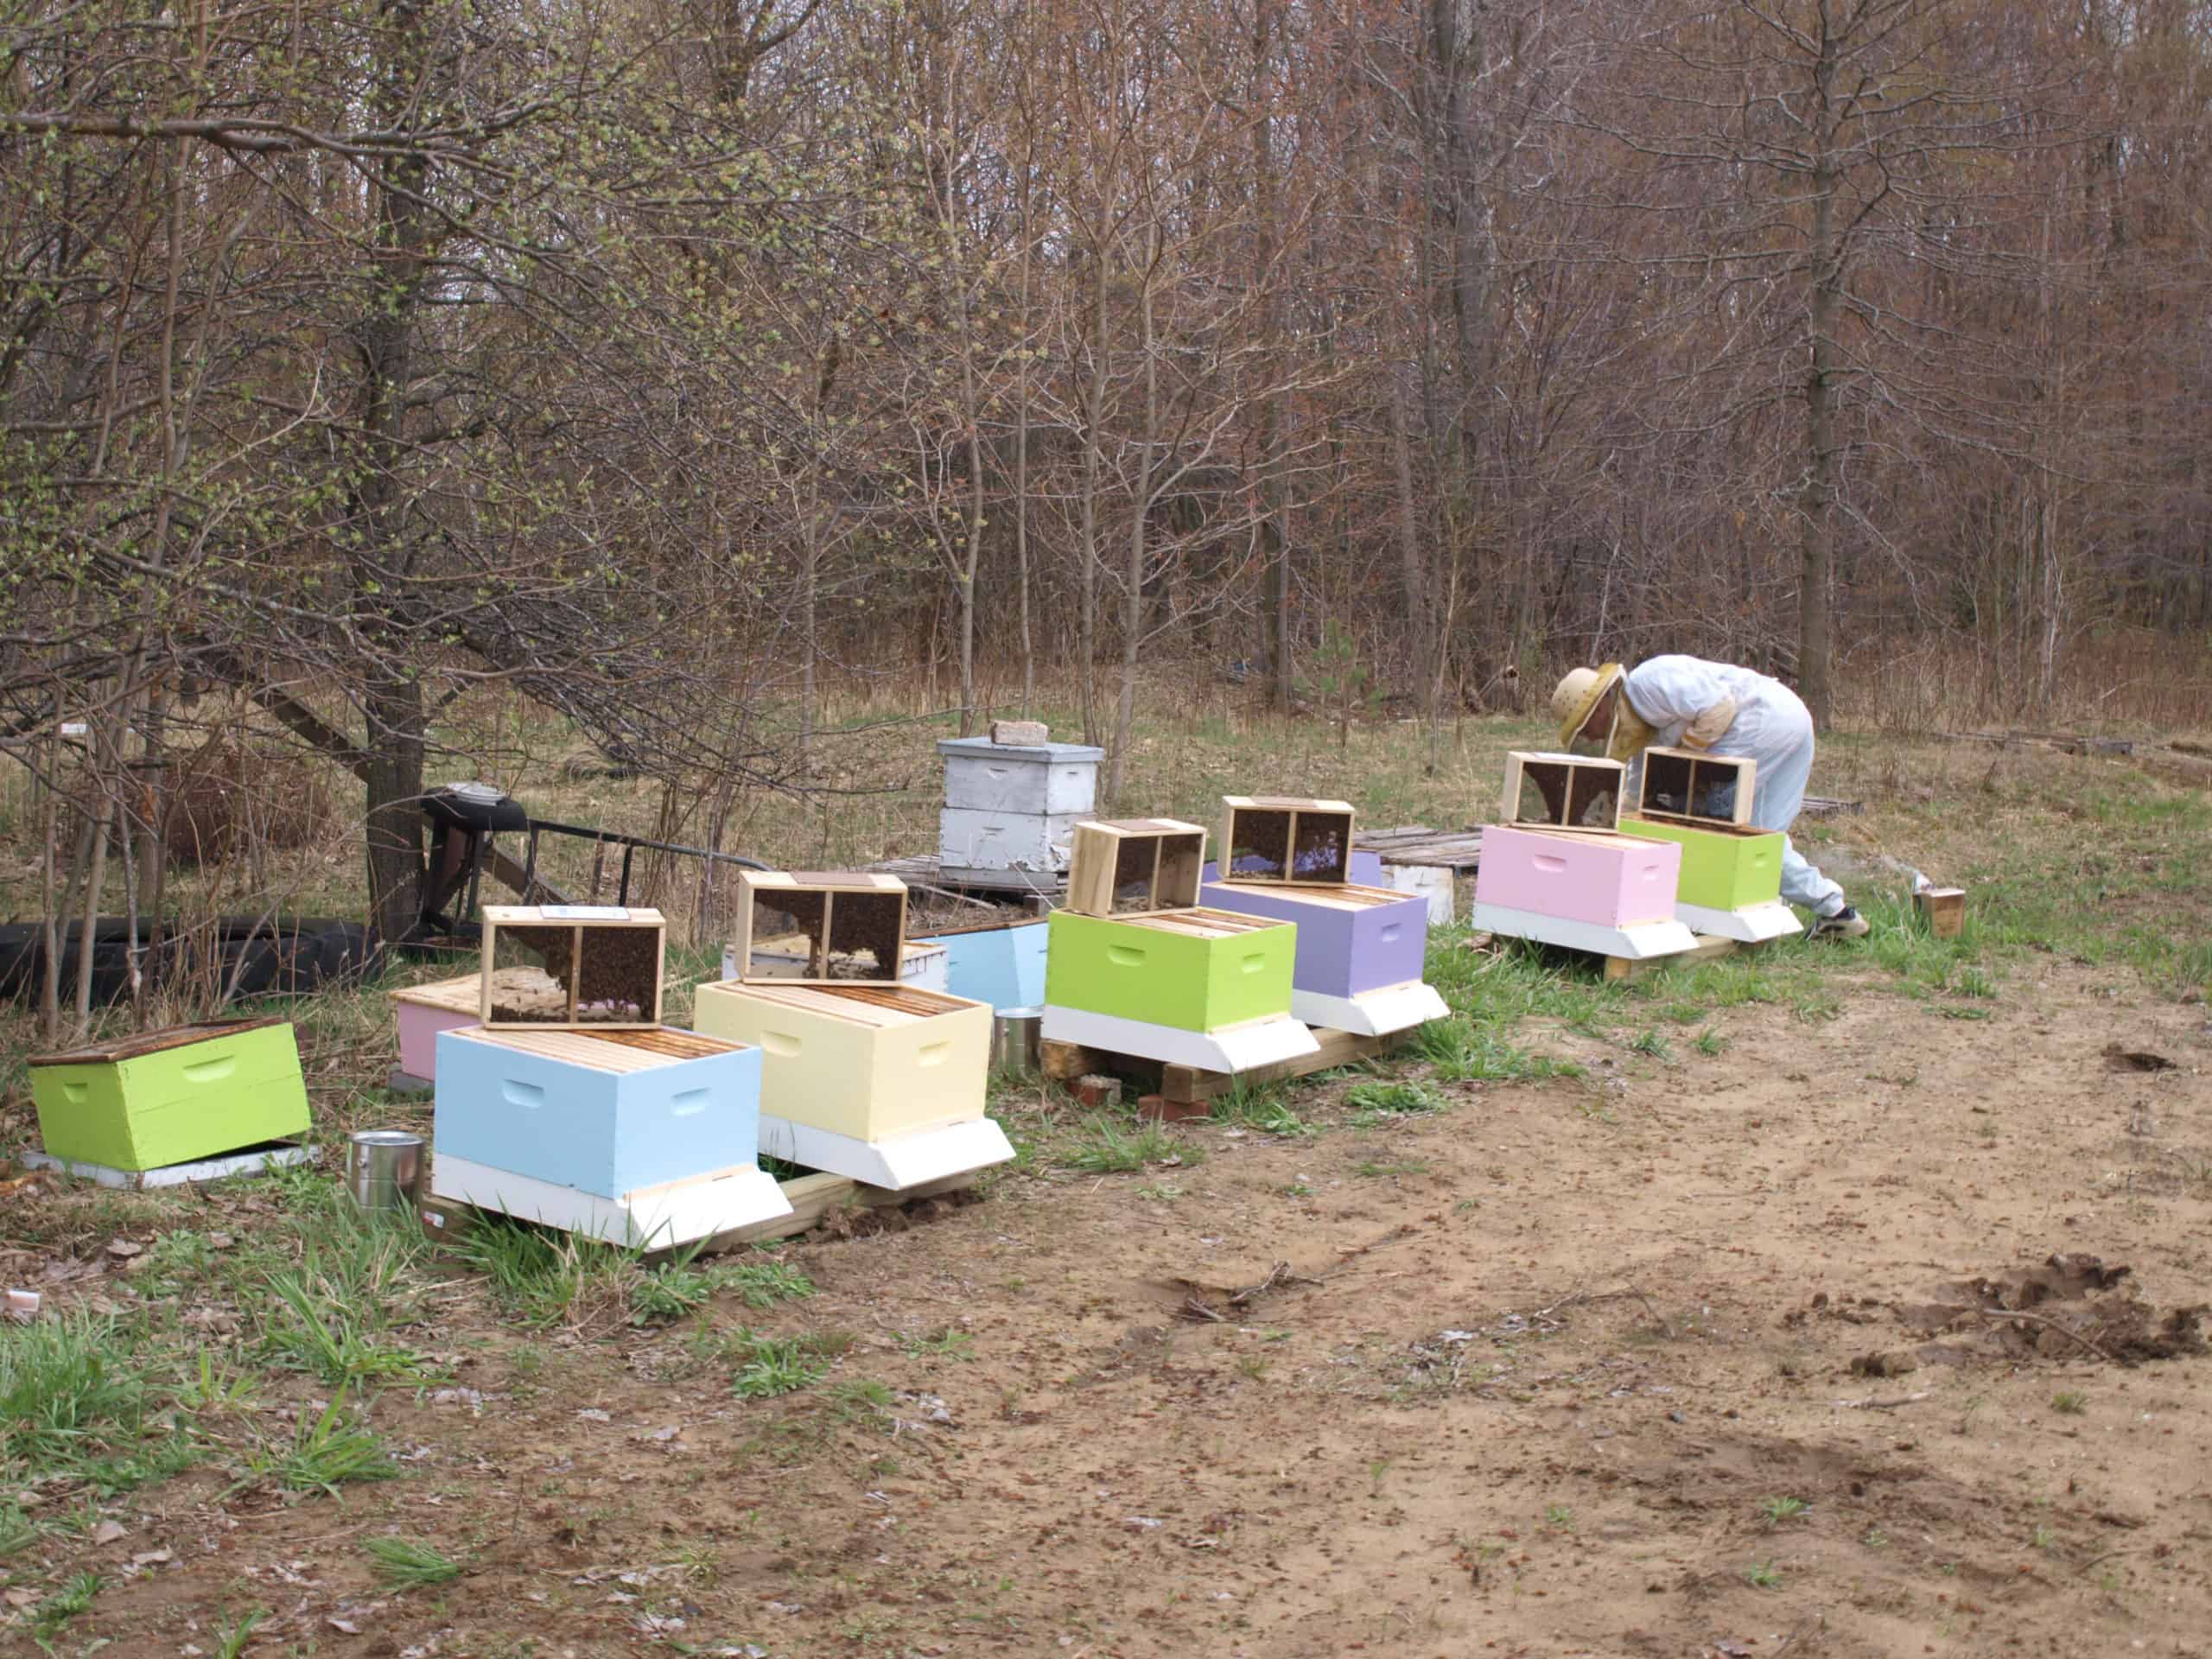 Tutorial (4) – Buying Bees